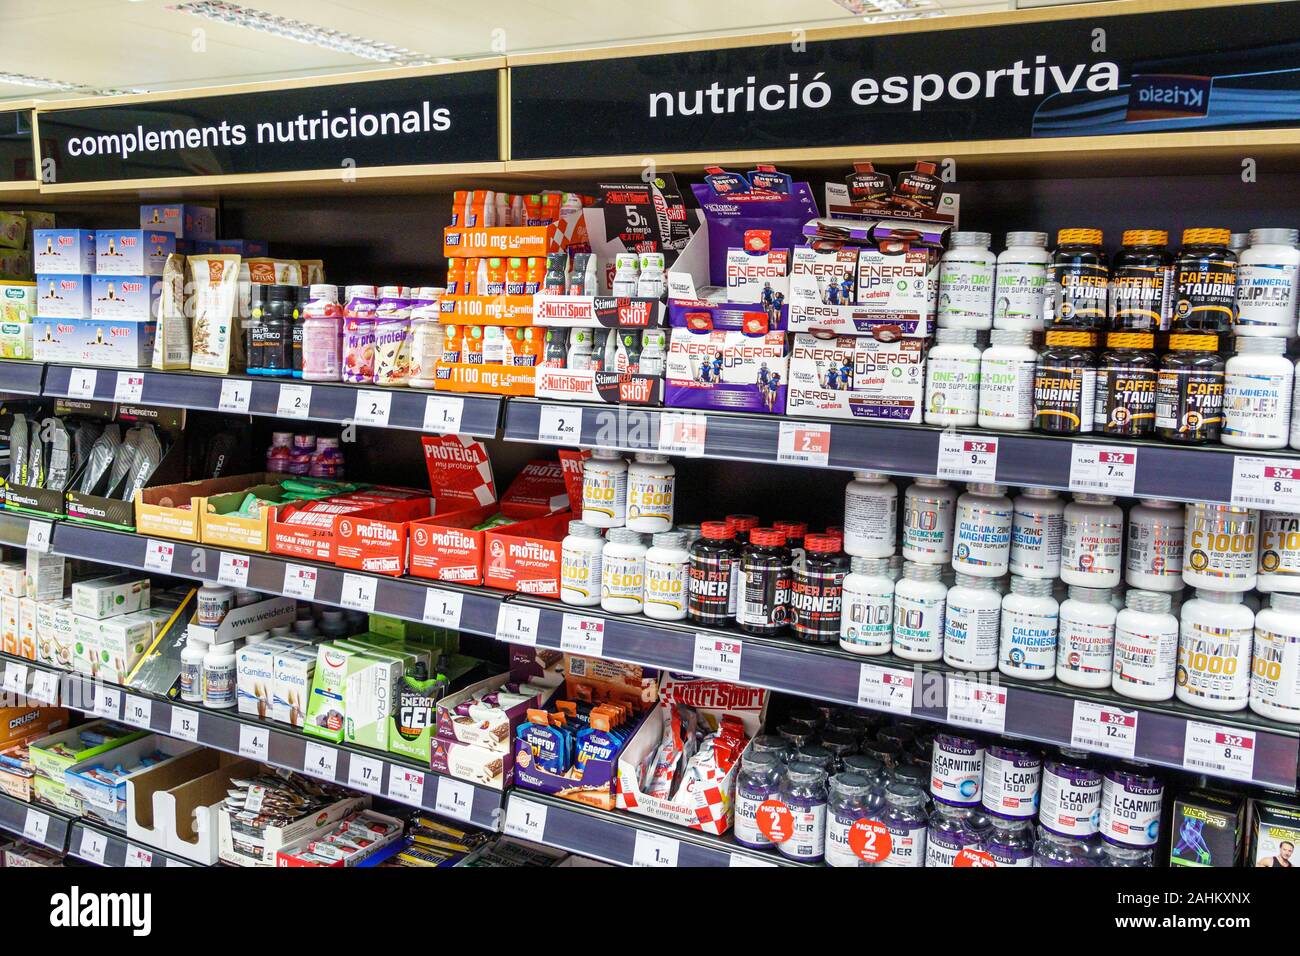 Tarragona Spain Hispanic Catalonia El Corte Ingles,department store,interior inside,supermarket,grocery store,sports nutritional supplements,display s Stock Photo